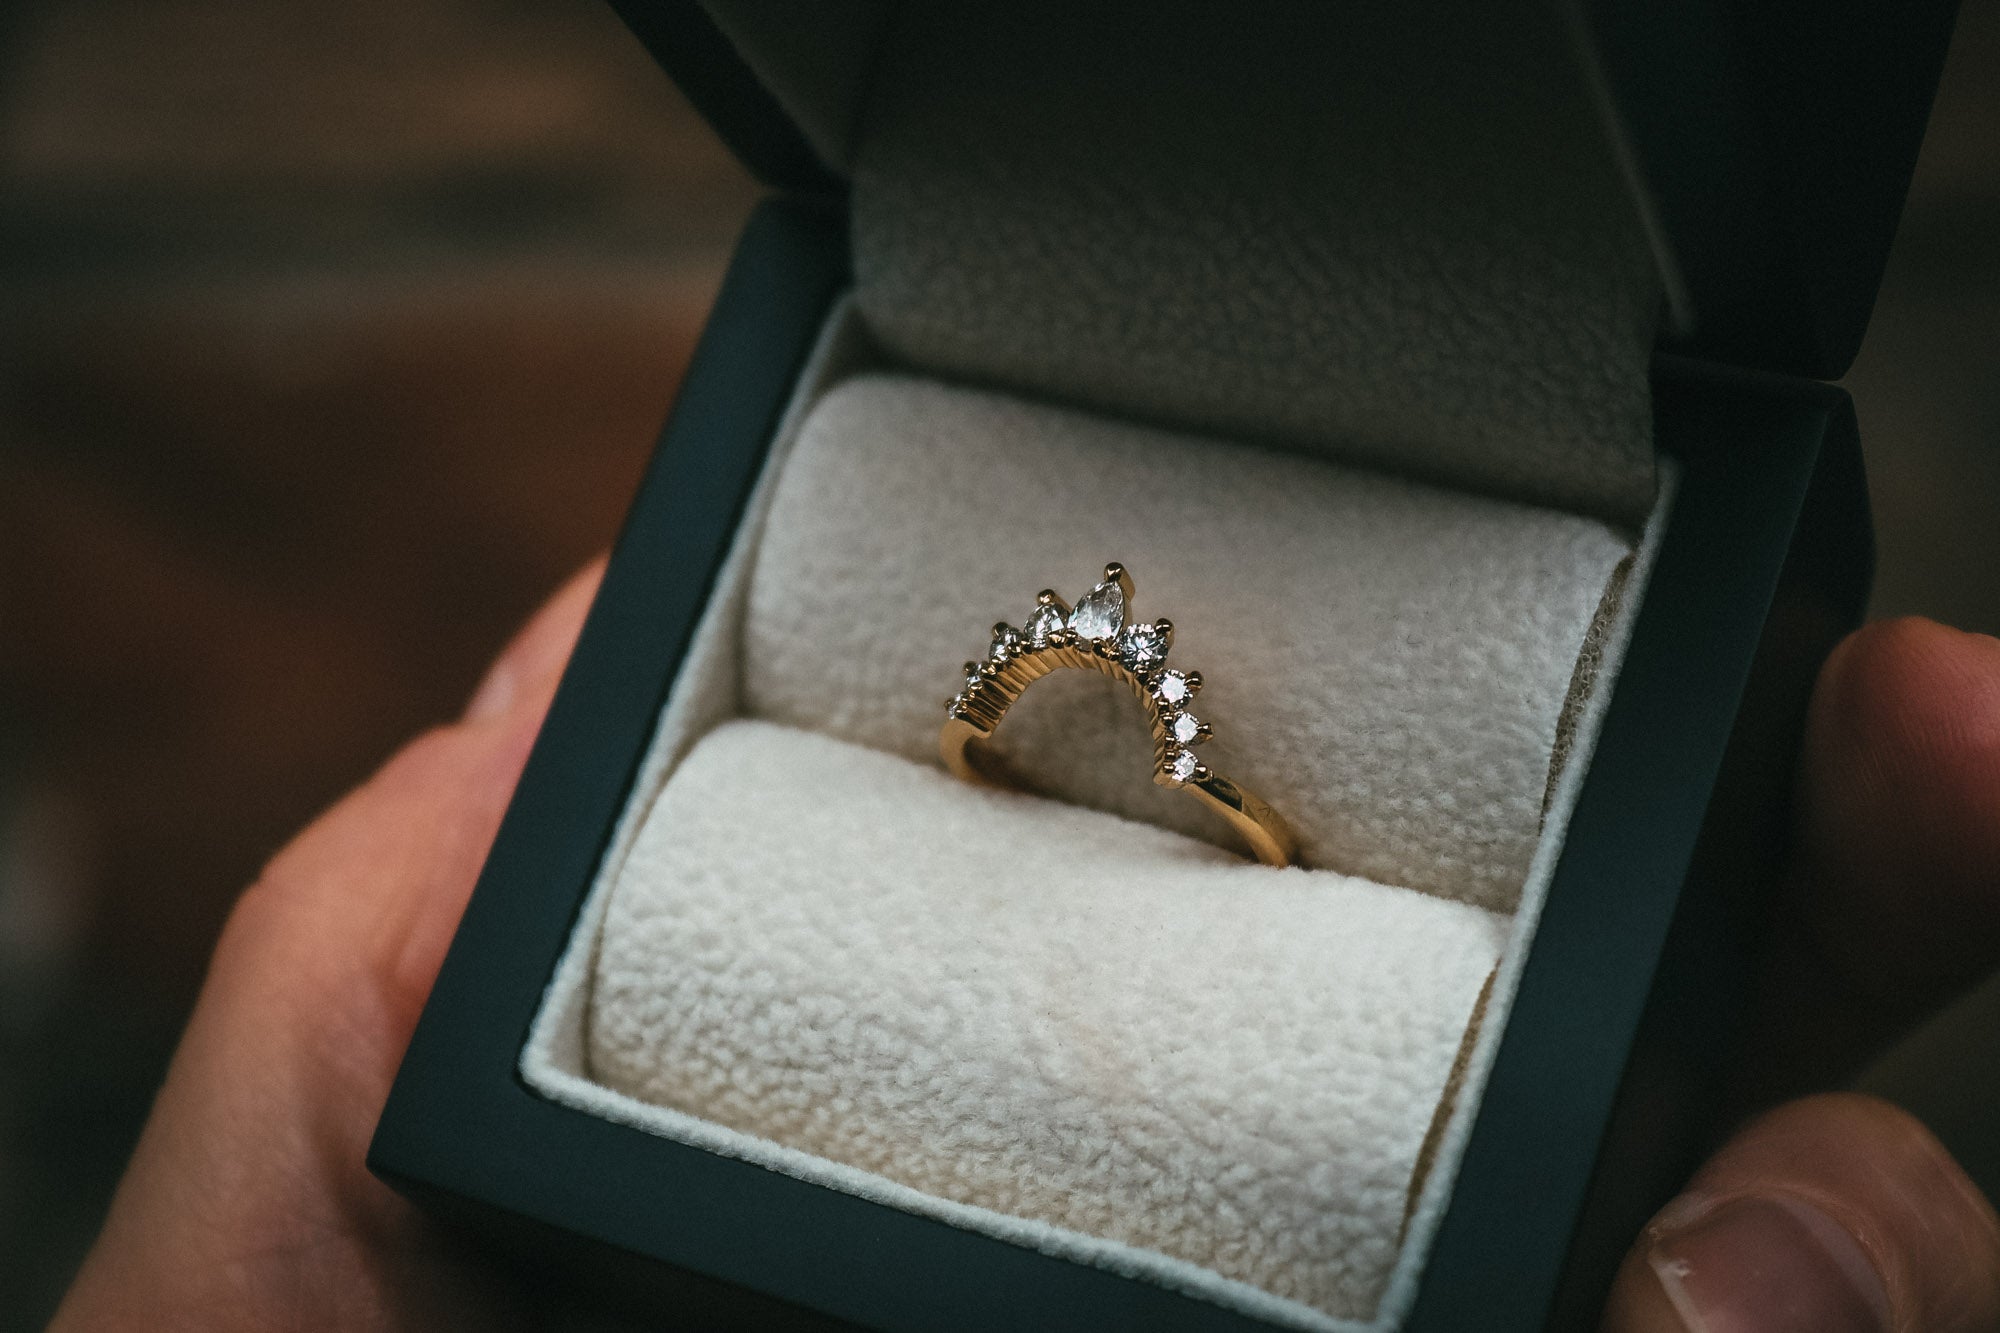 Bespoke fitted diamond wedding ring